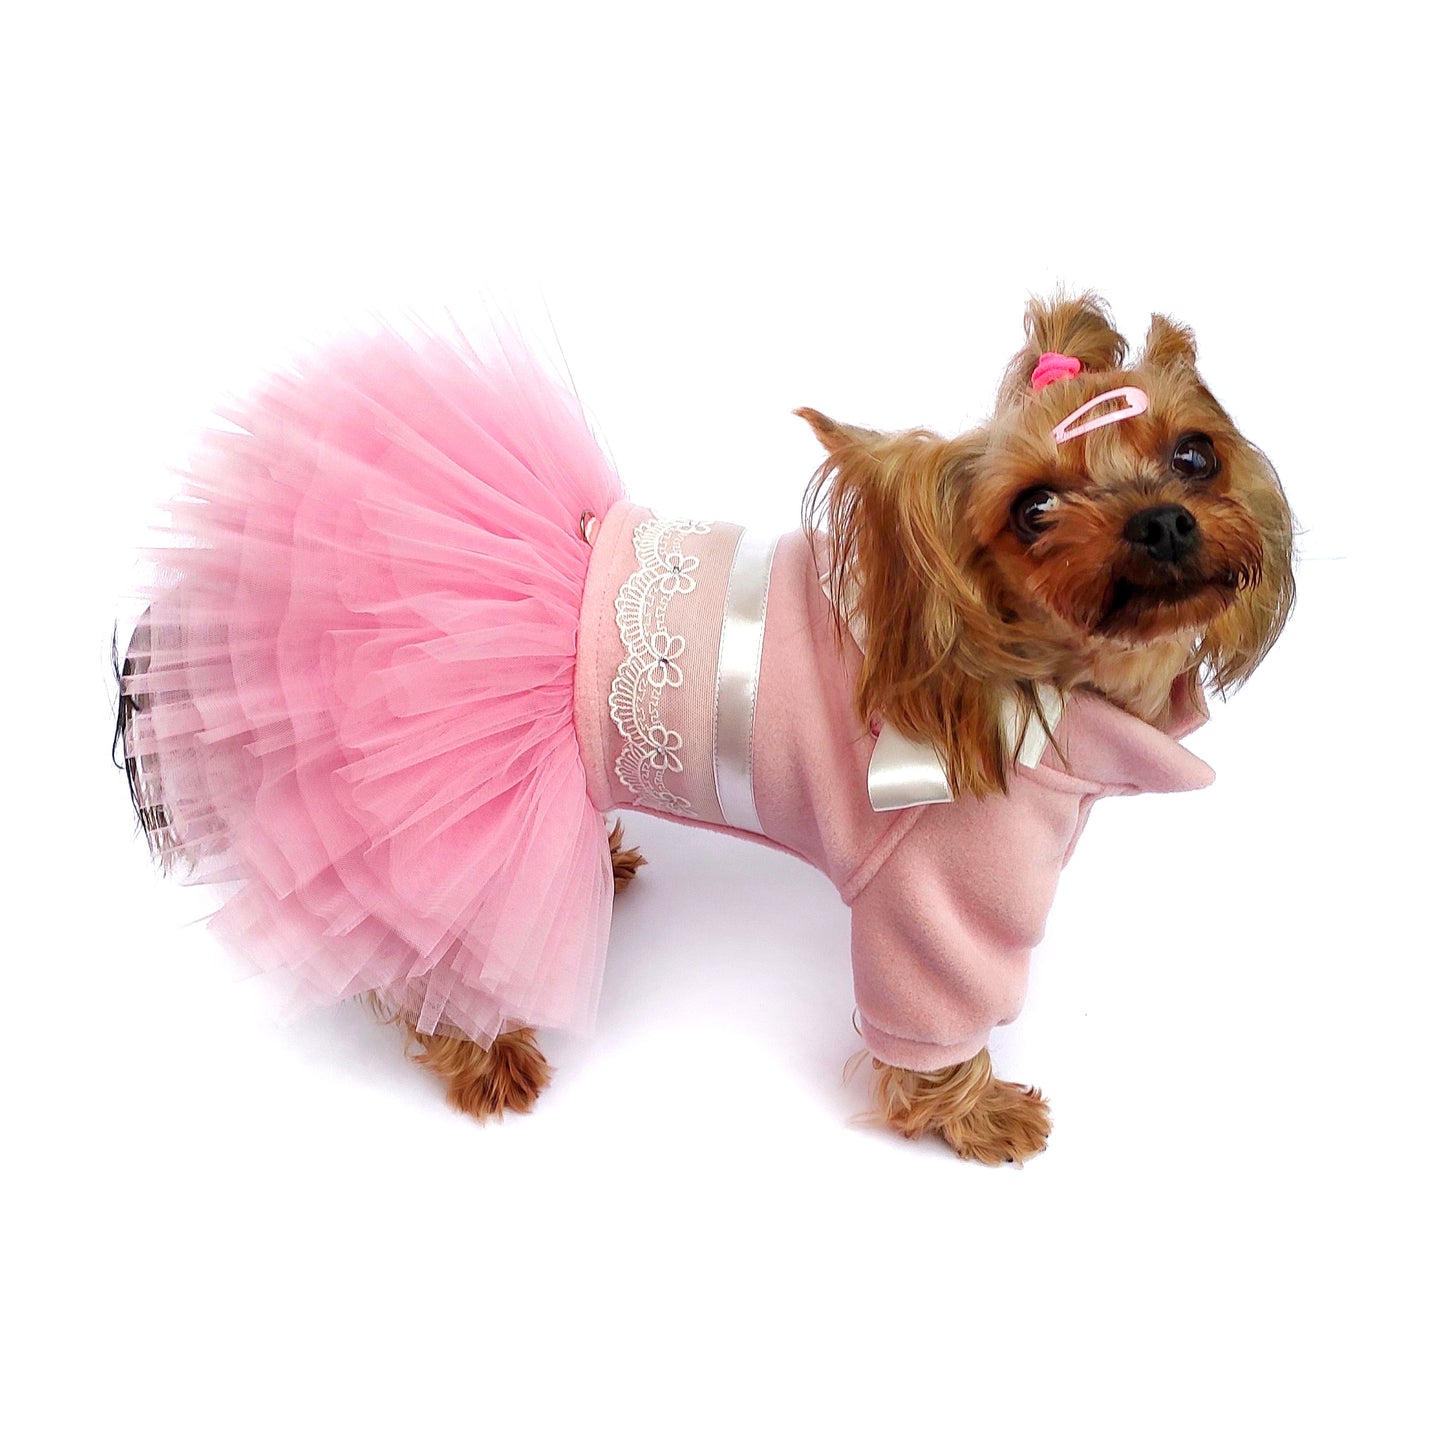 Pink Dog Coat with Tutu Skirt - Adorable and Functional Pet Apparel